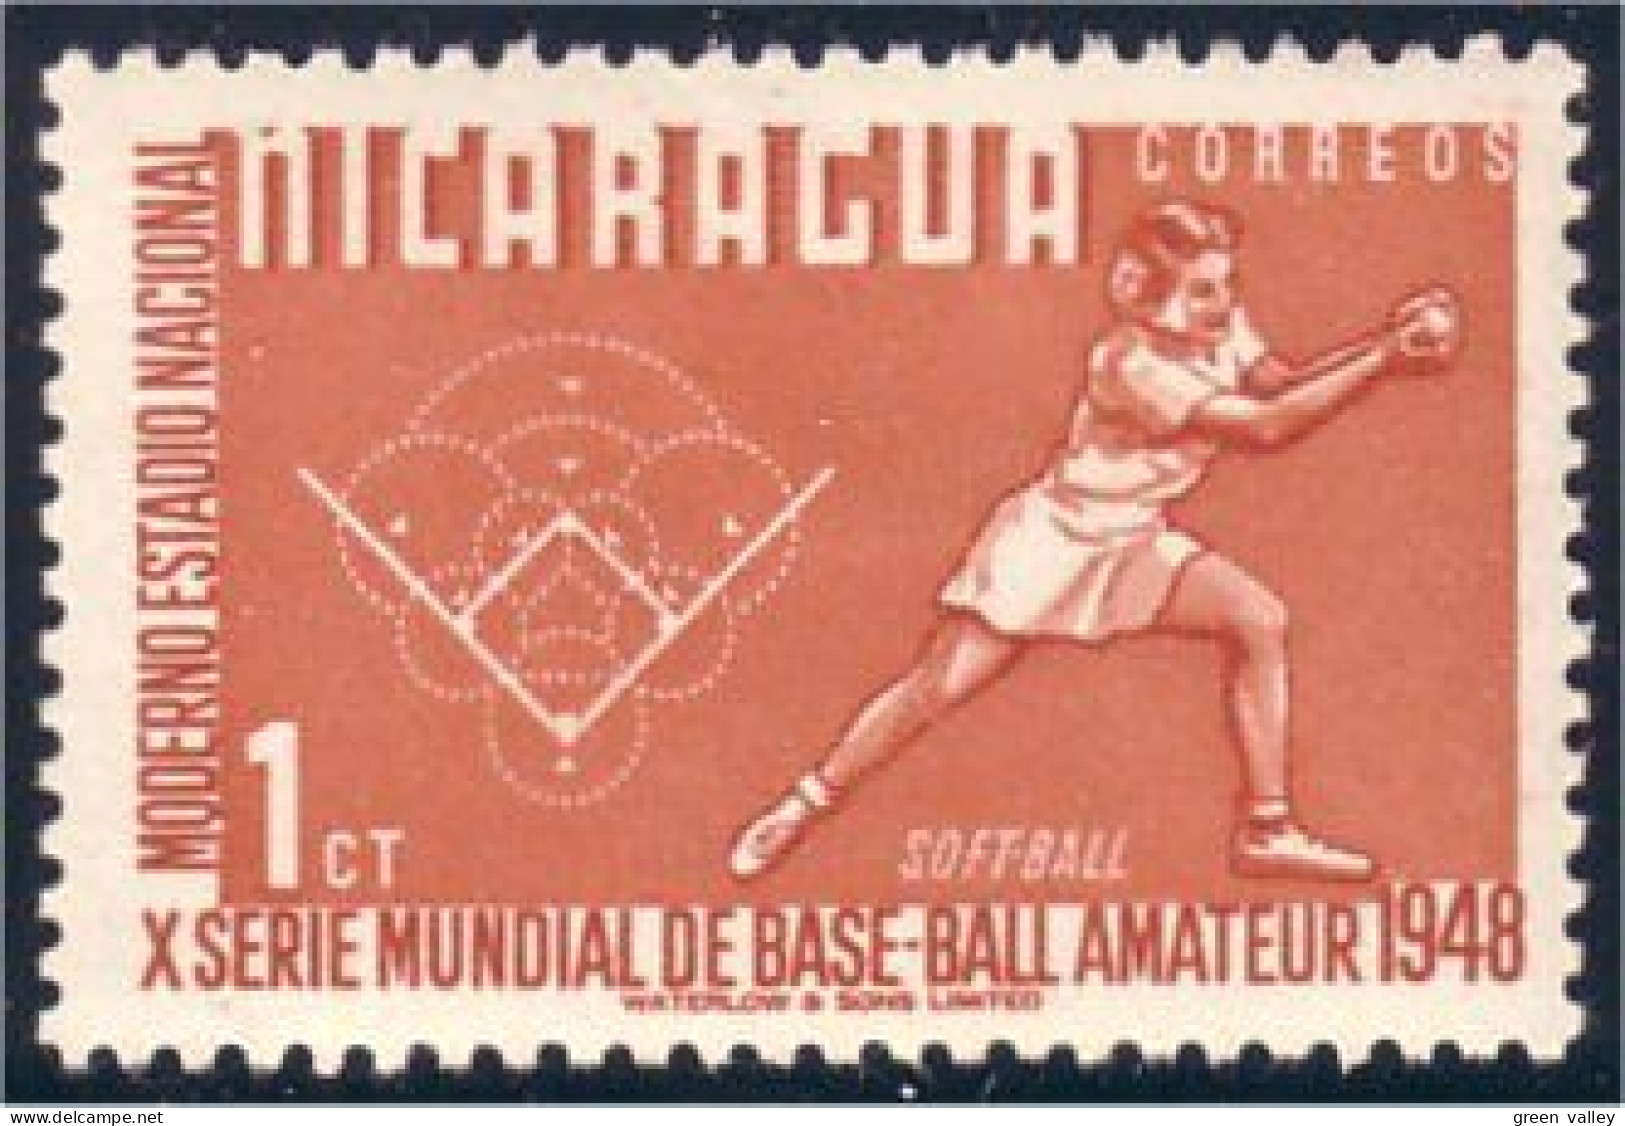 684 Nicaragua Baseball Base Ball MLH * Neuf (NIC-173) - Béisbol